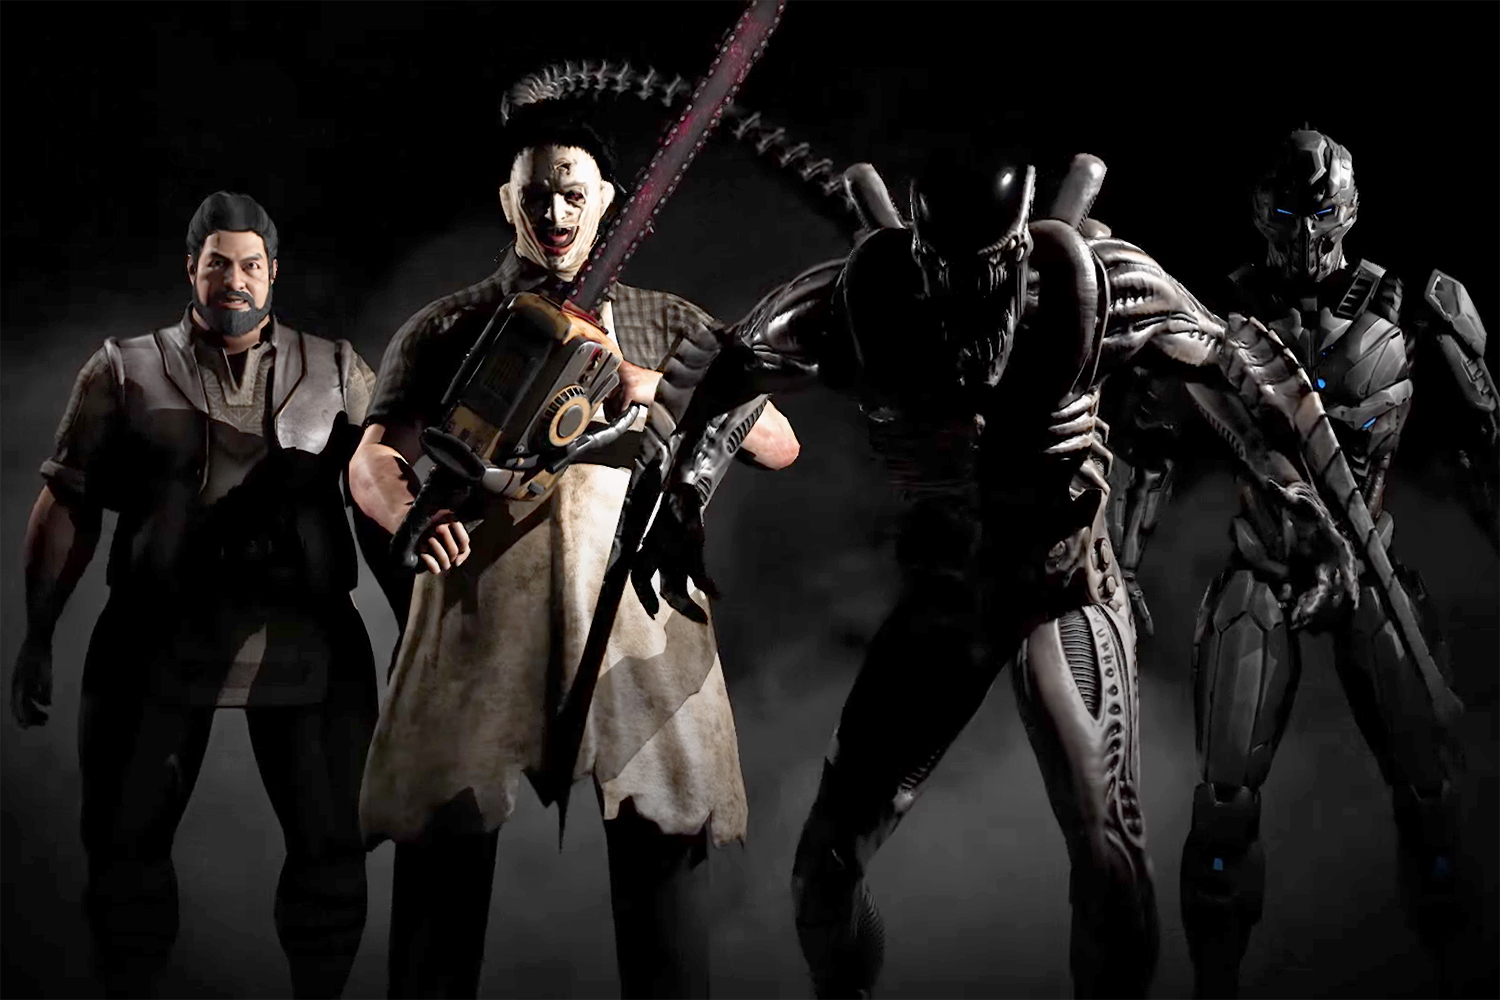 Mortal Kombat XL launches Enhanced Online PC beta